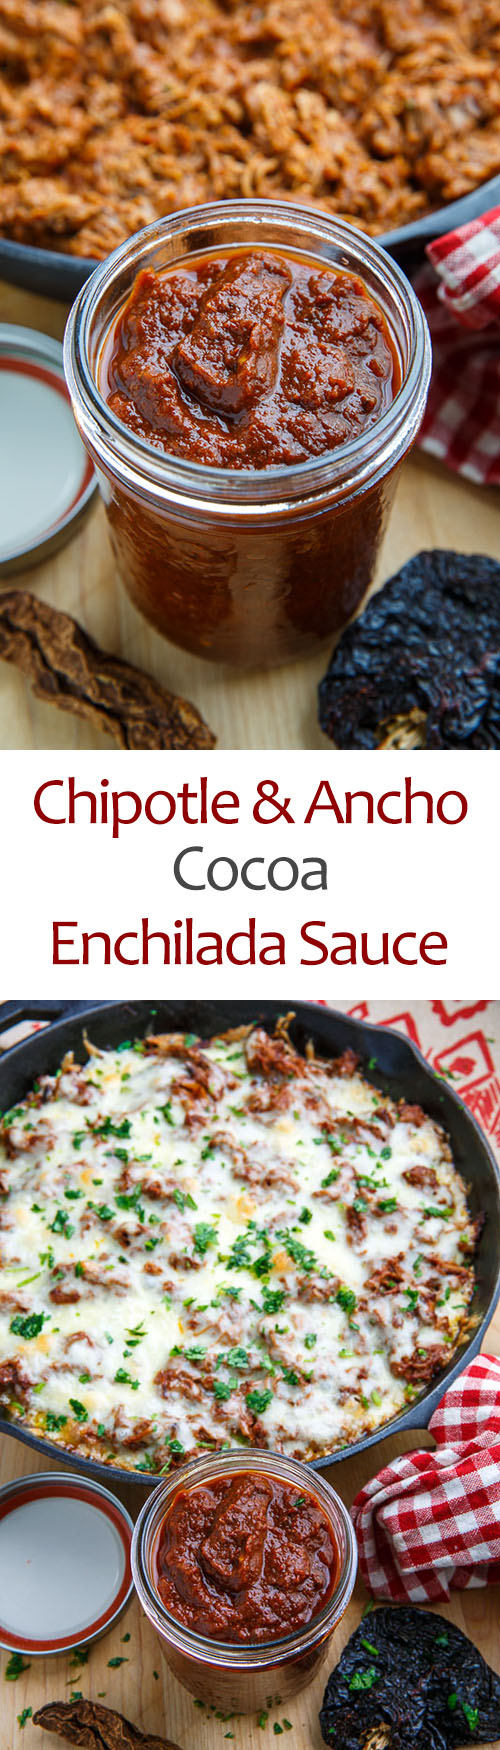 Chipotle and Ancho Cocoa Enchilada Sauce